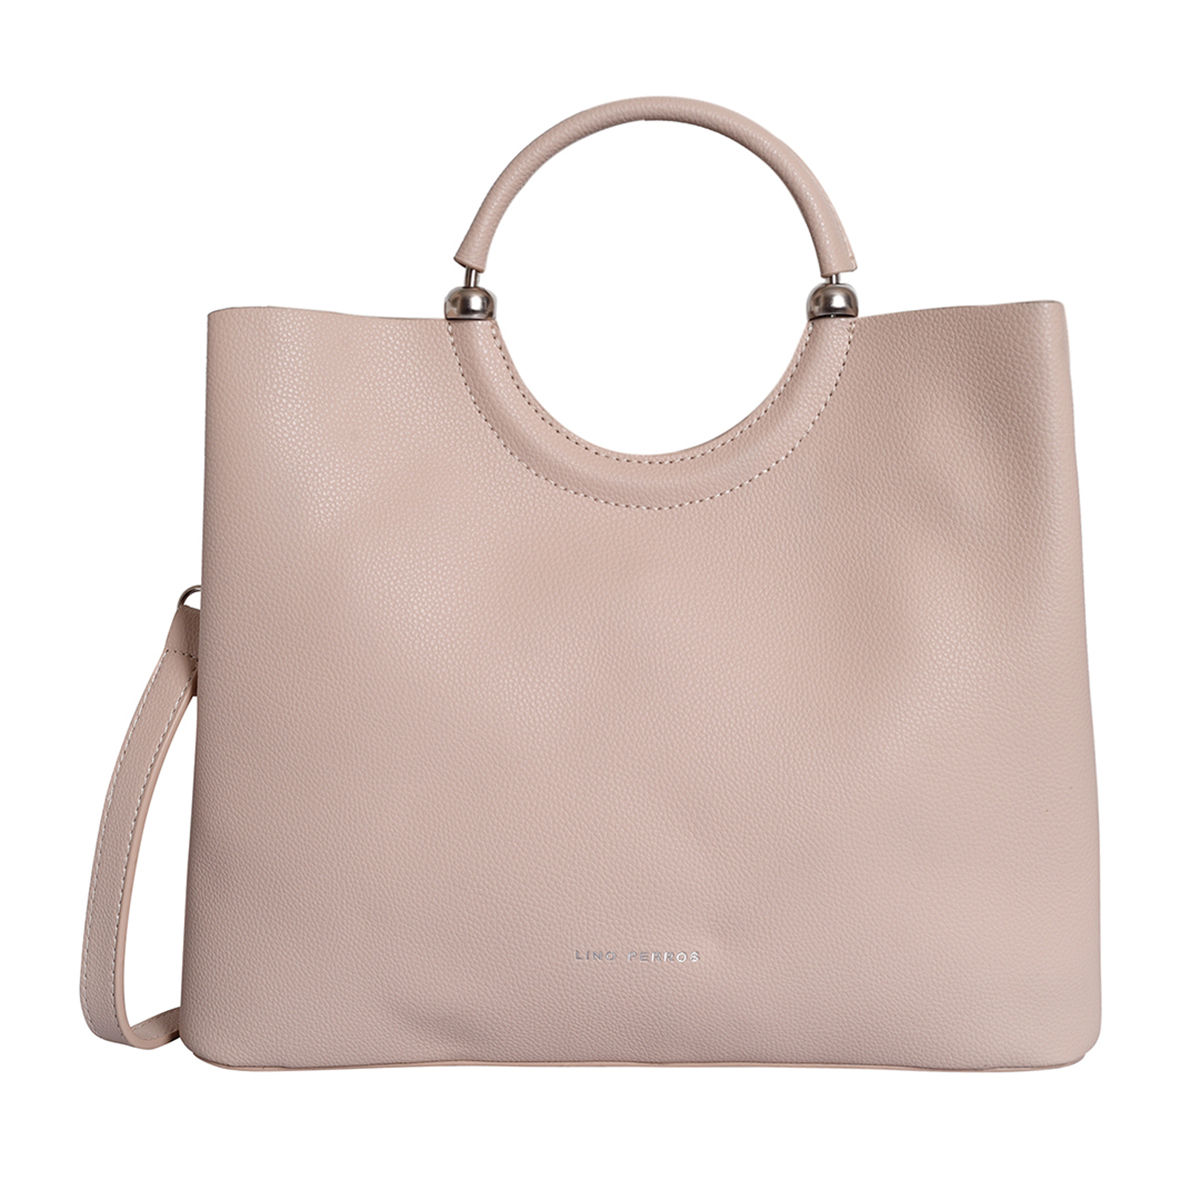 Lino Perros womens handbag, BEIGE: Handbags